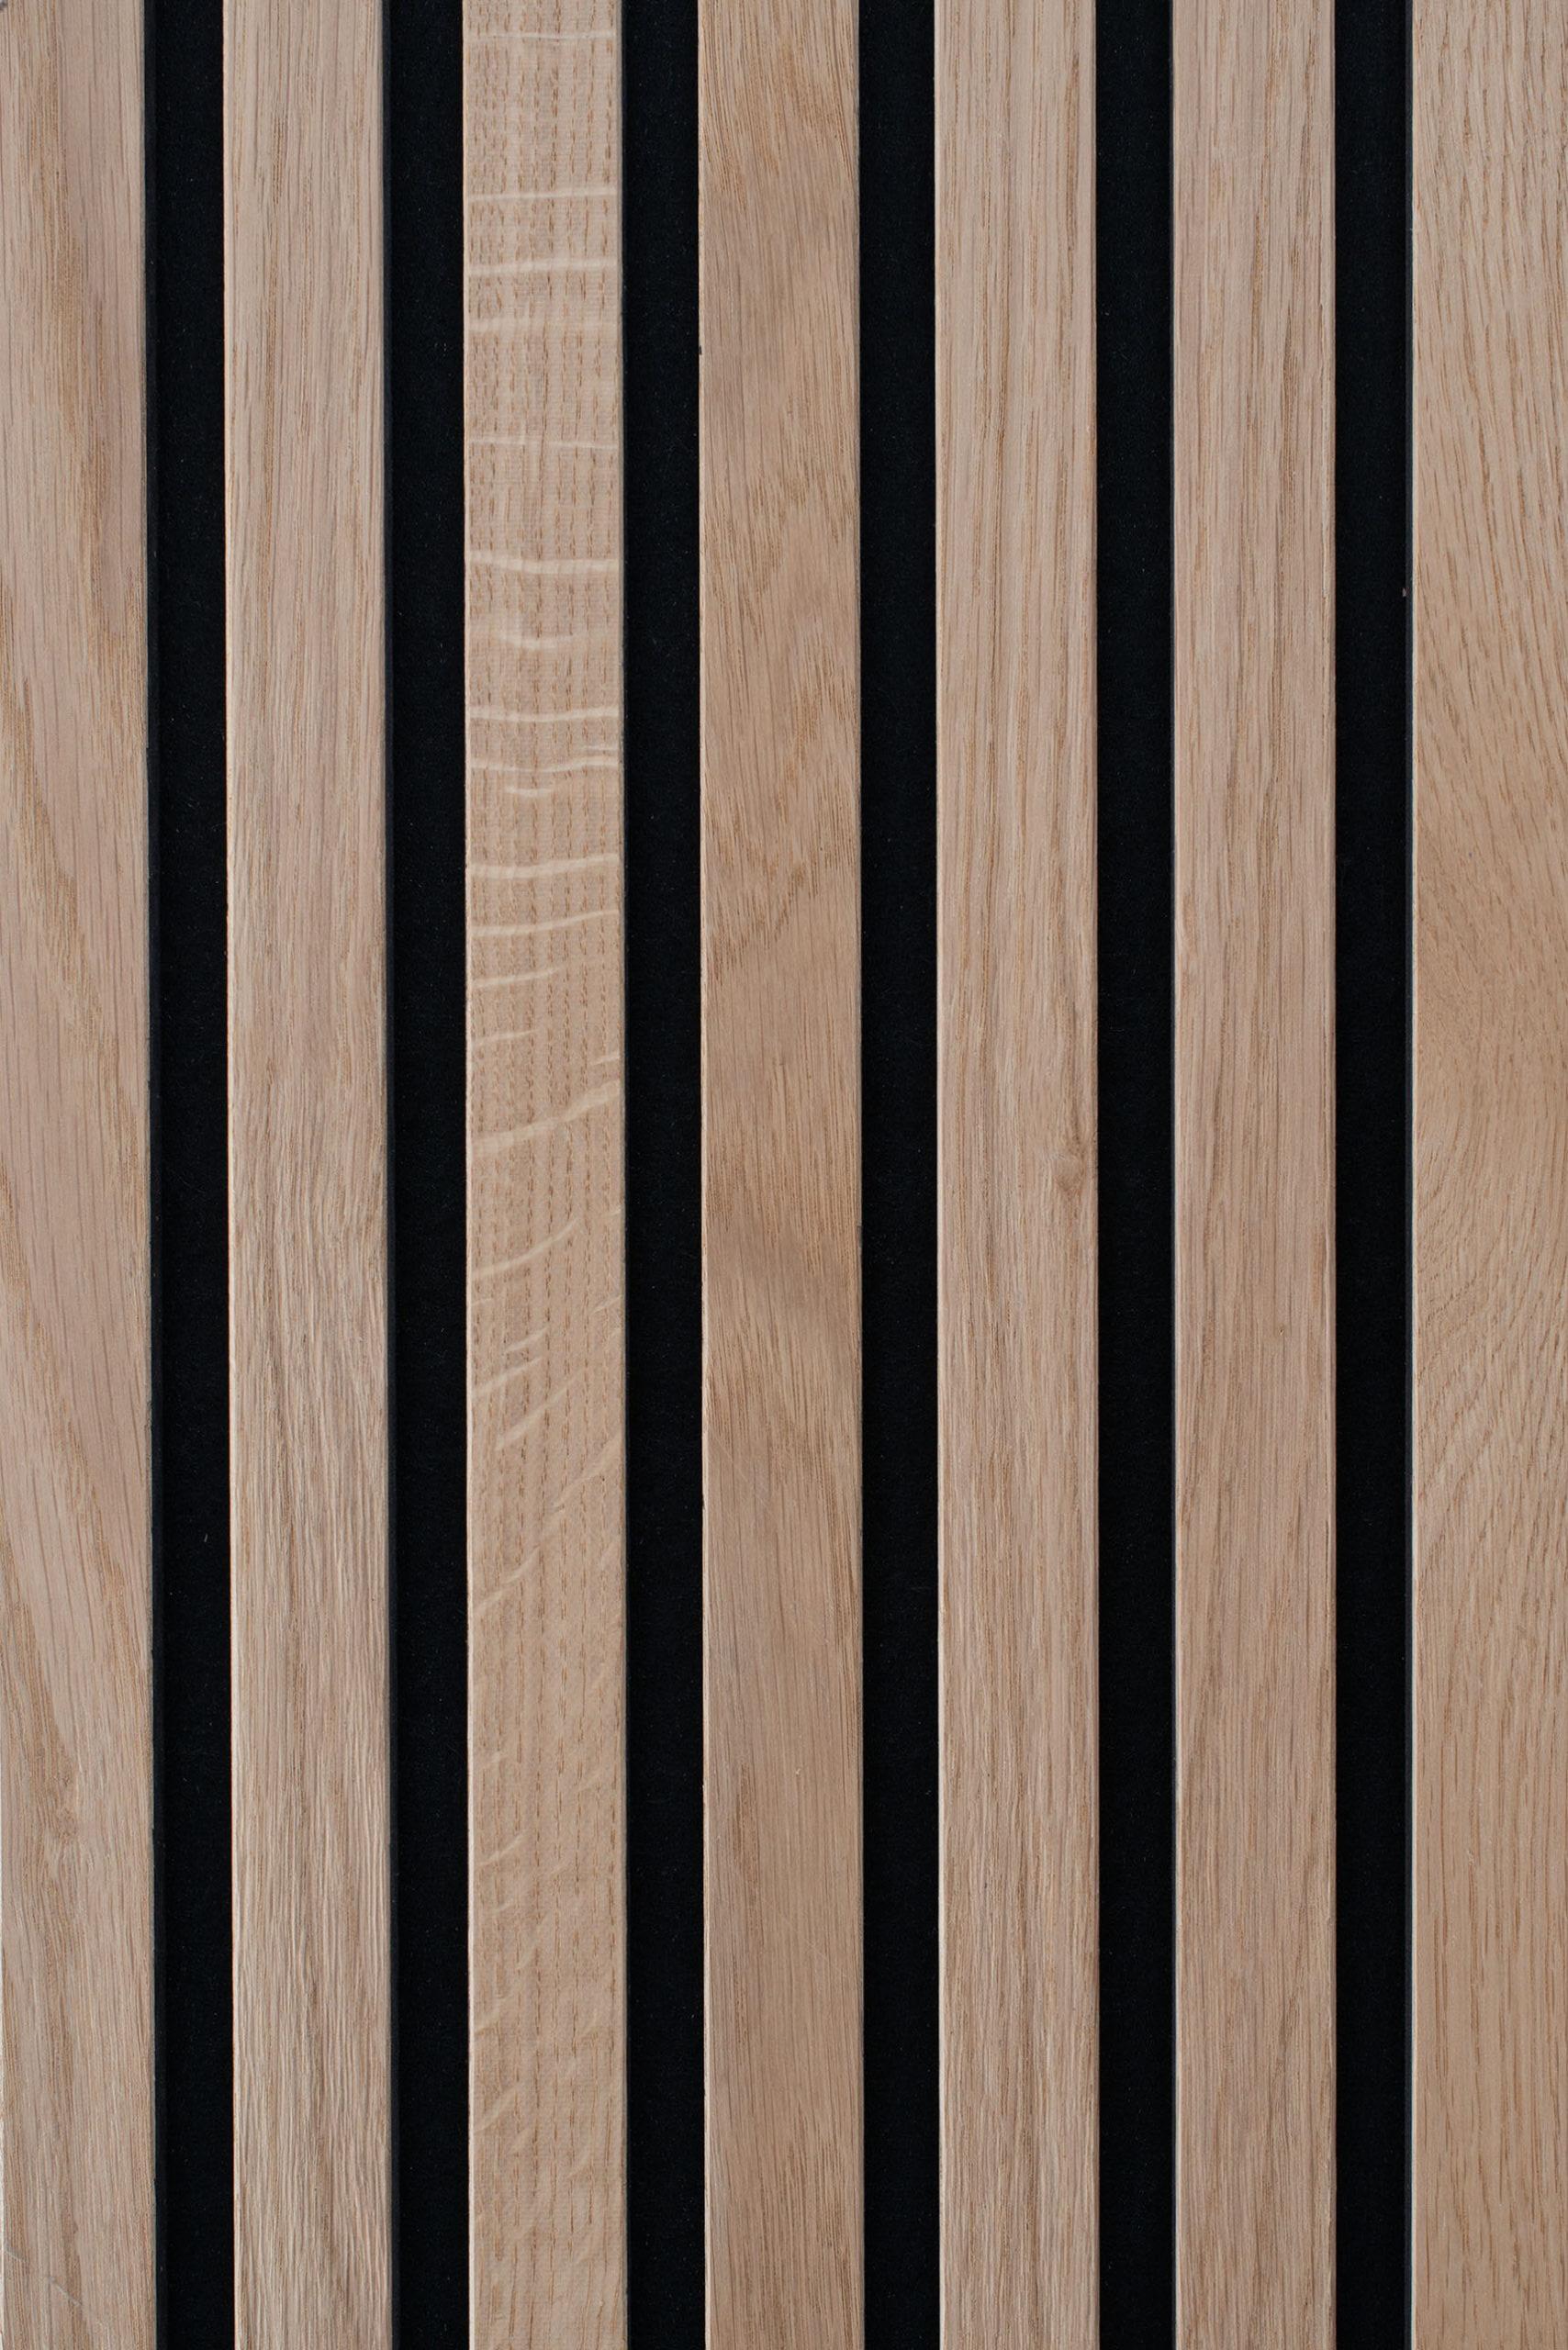 Nawood Pure 300x60x2,2 akustični panel sa drvenim letvicama 1.80